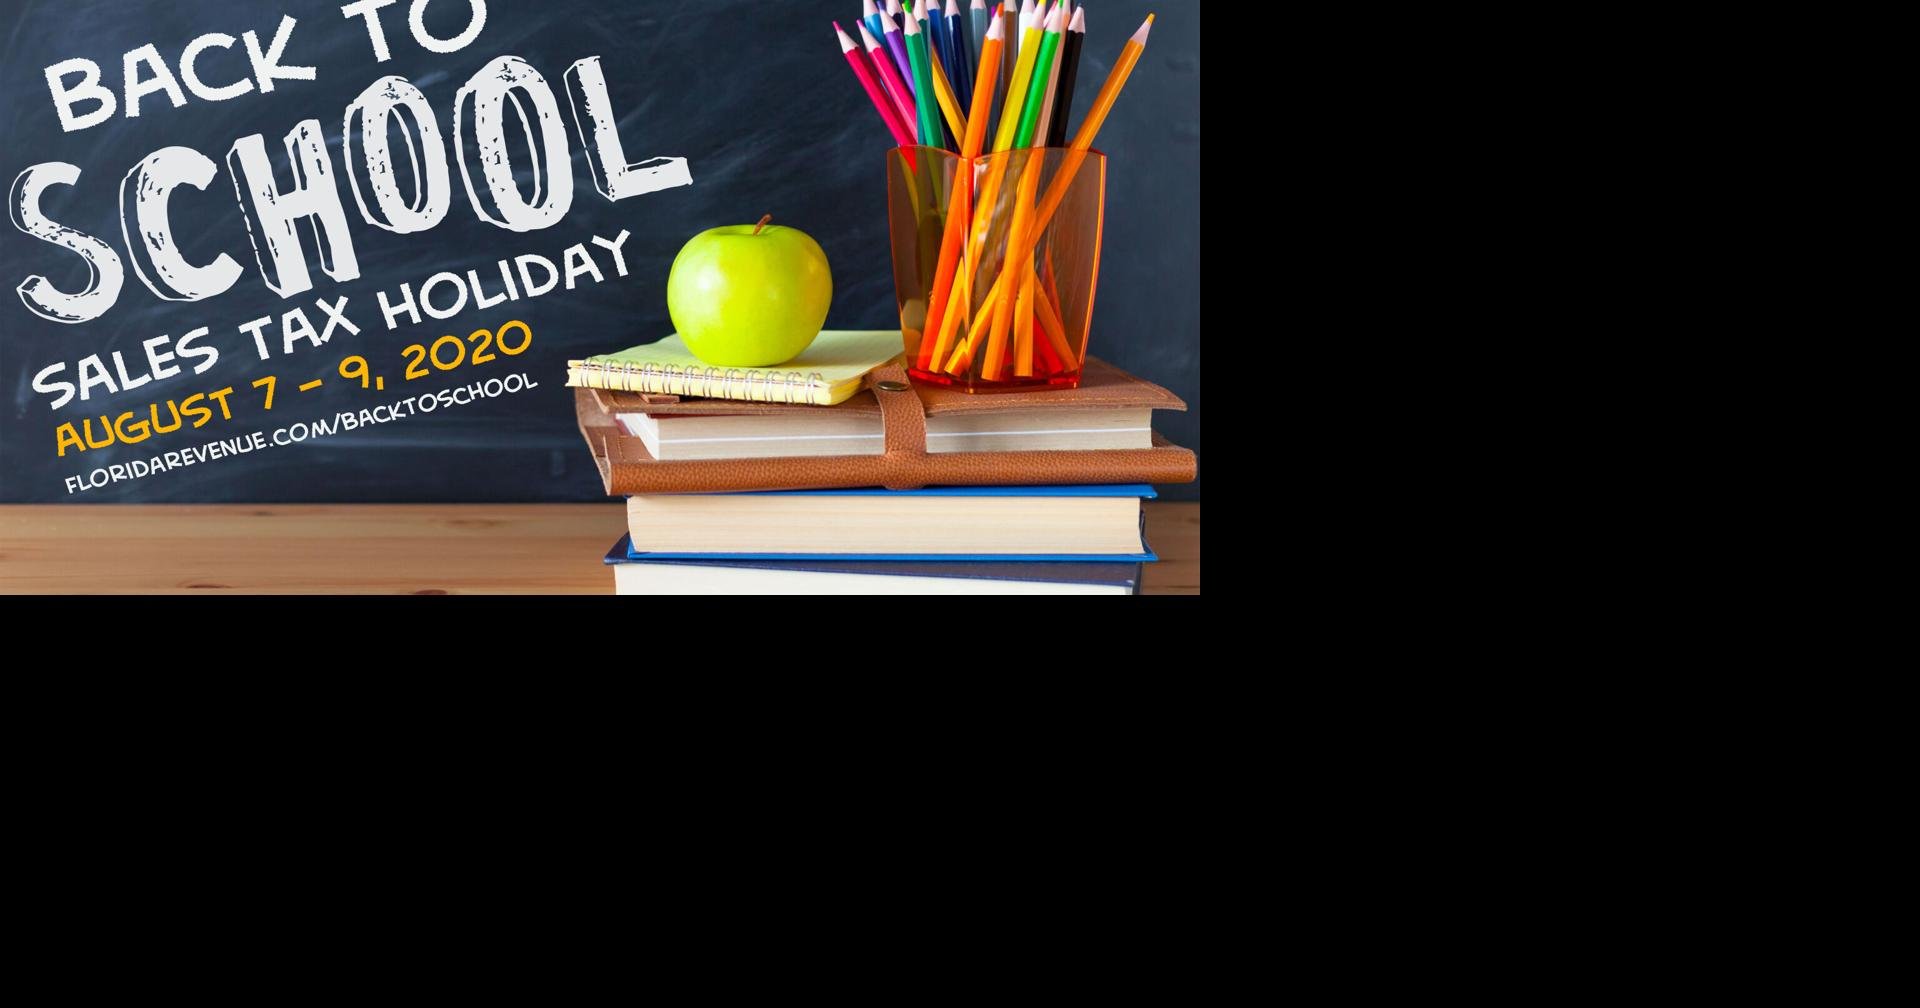 BacktoSchool Tax Holiday set for Aug. 79 Schools